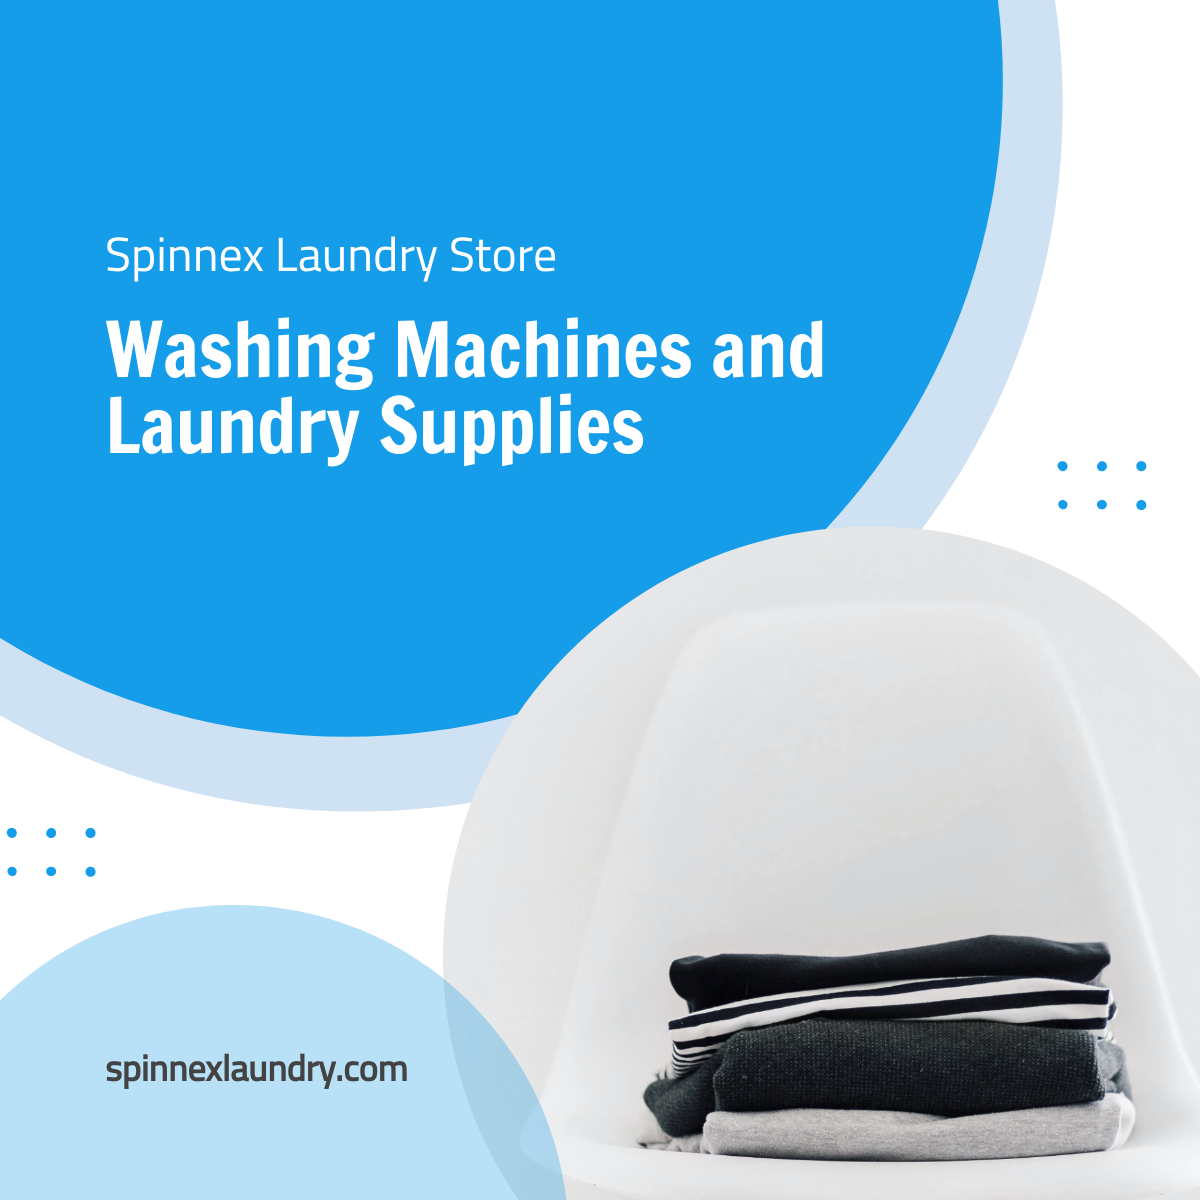 Laundry Store Linkedin Post